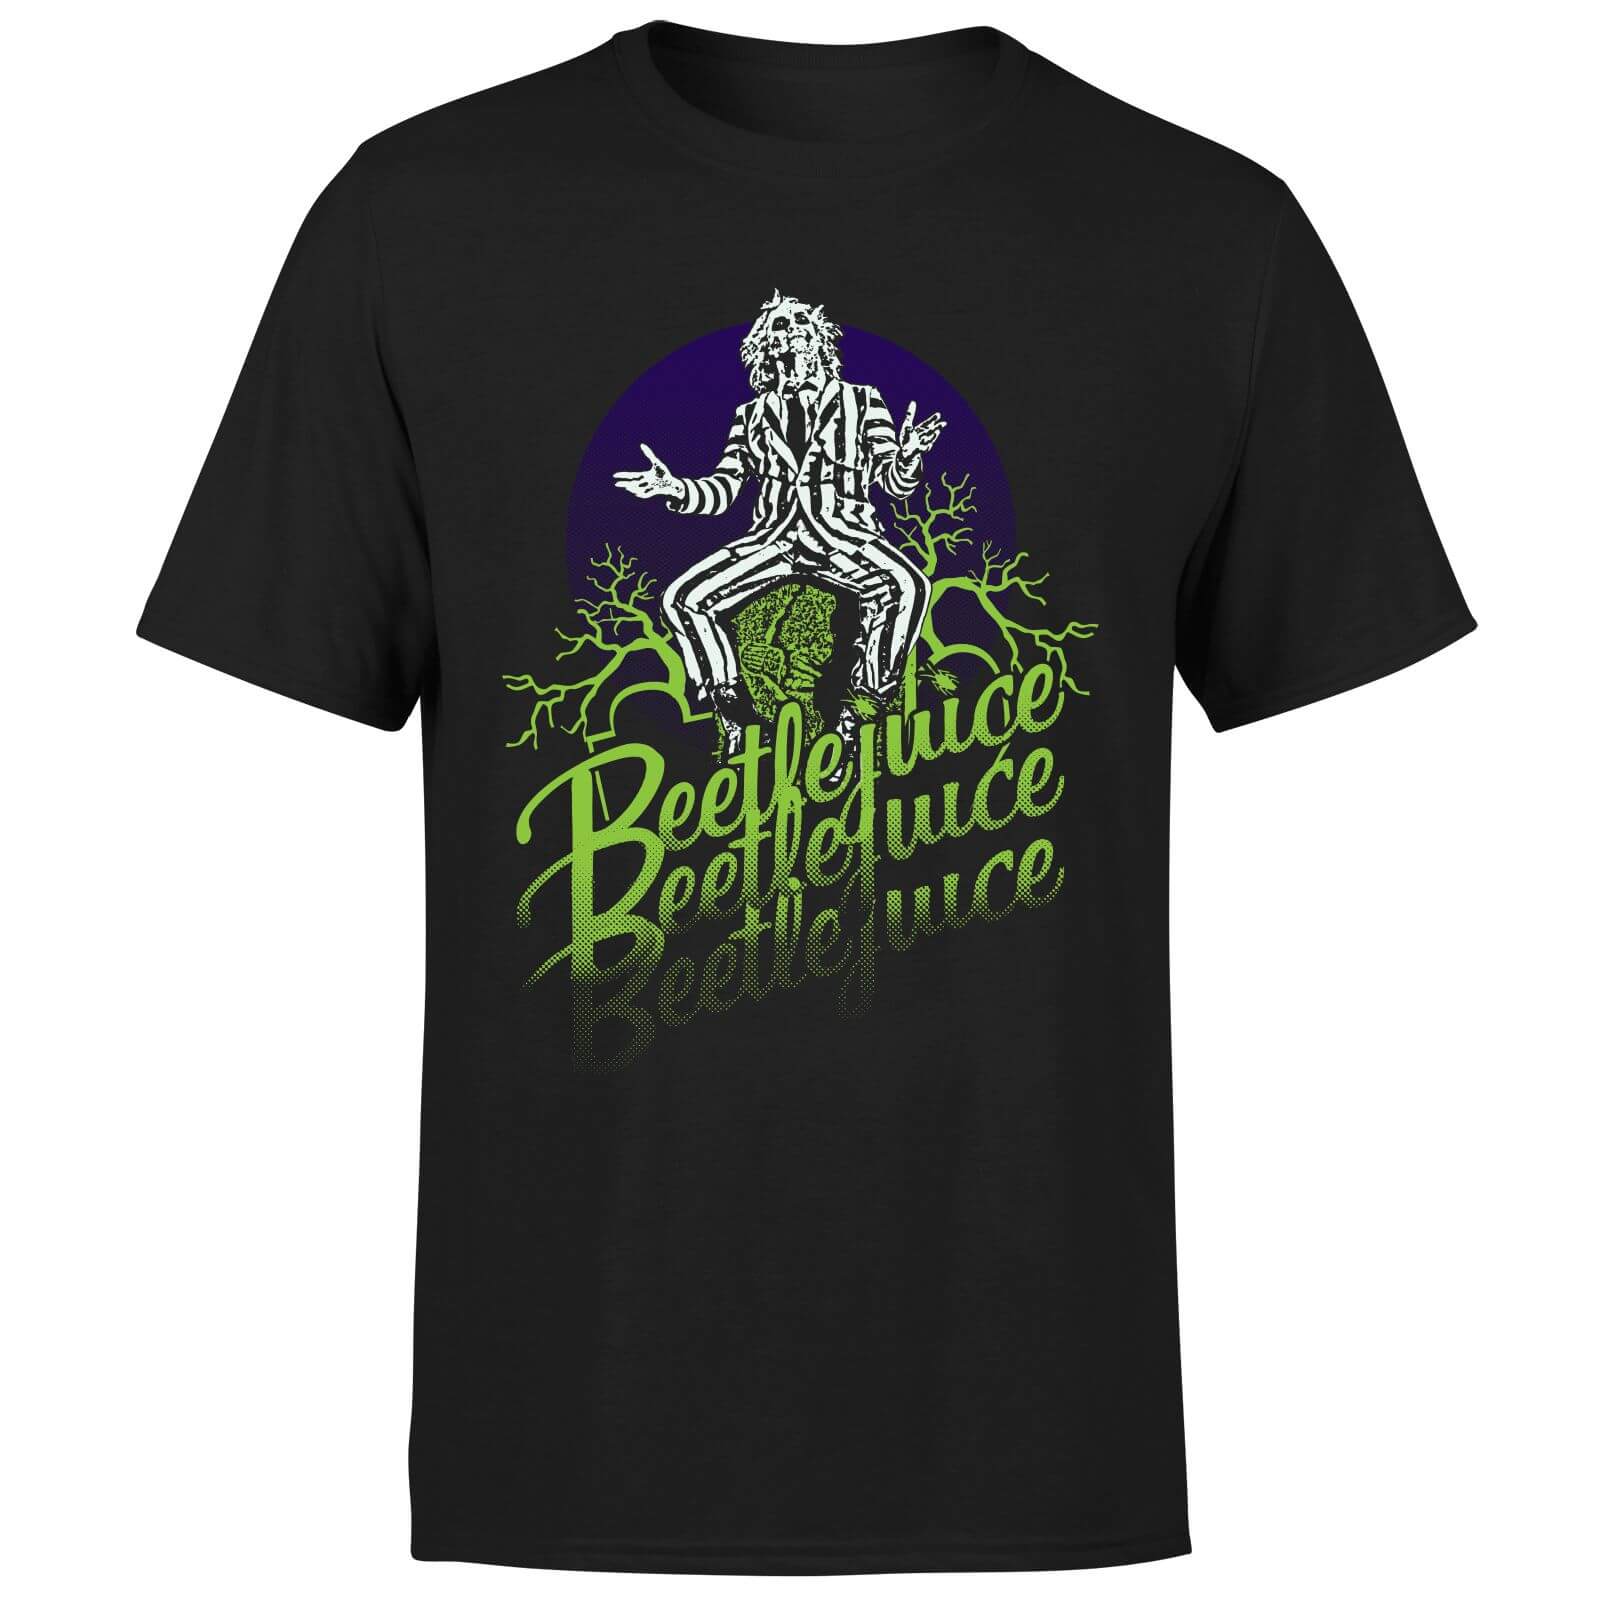 Beetlejuice Faded T-Shirt - Black - XL